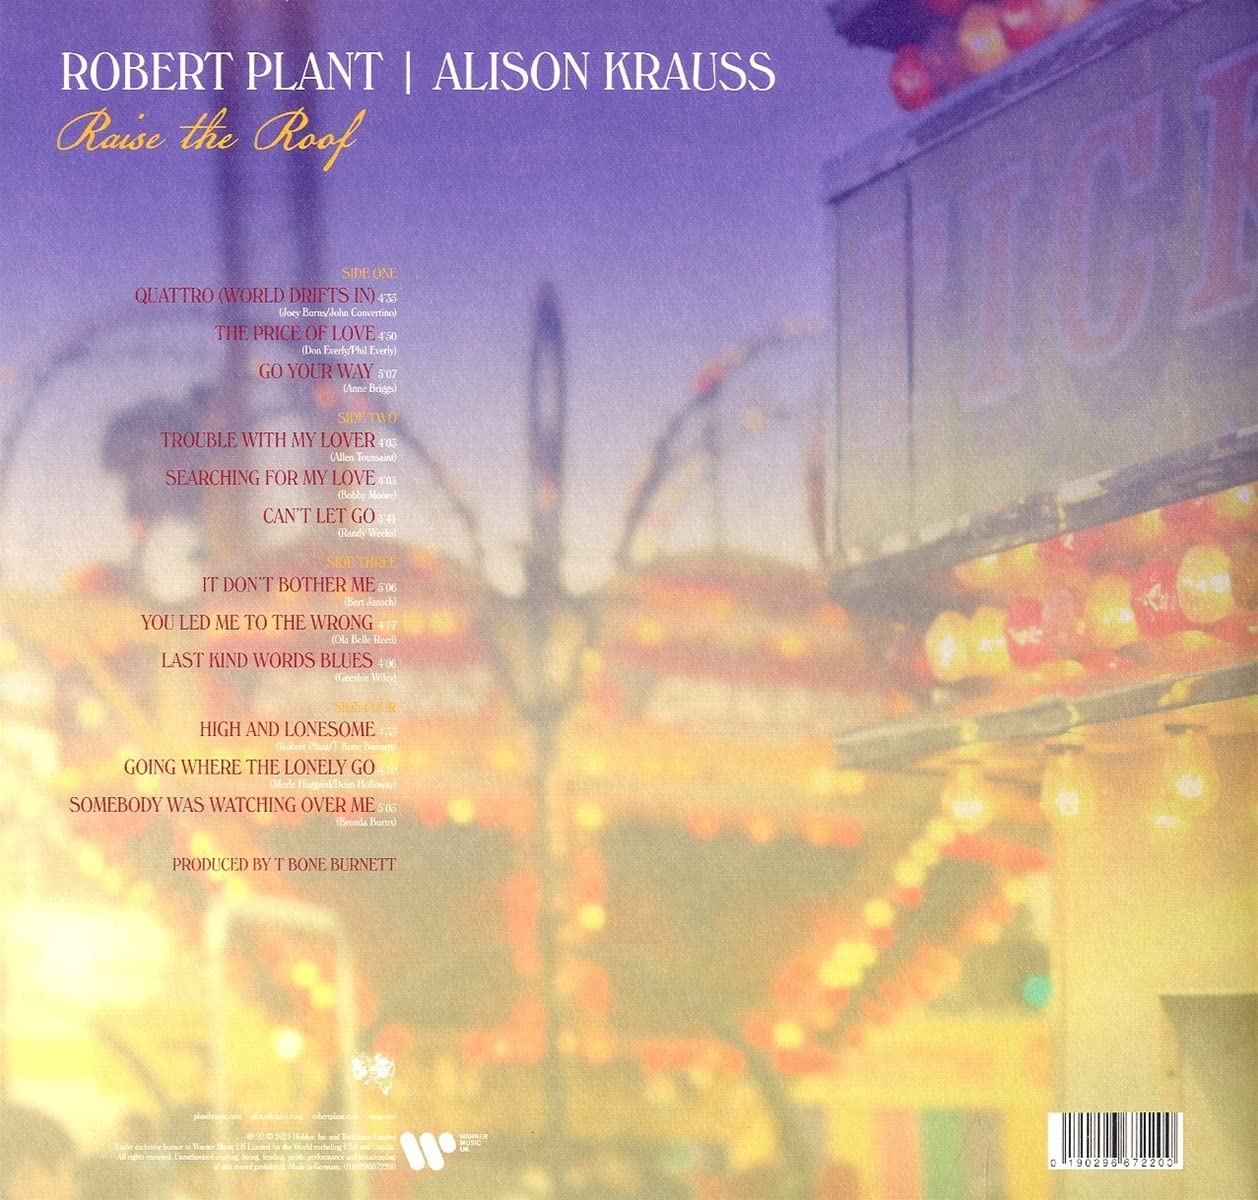 Robert Plant / Alison Krauss (로버트 플랜트 / 앨리슨 크라우스) - Raise The Roof [2LP]